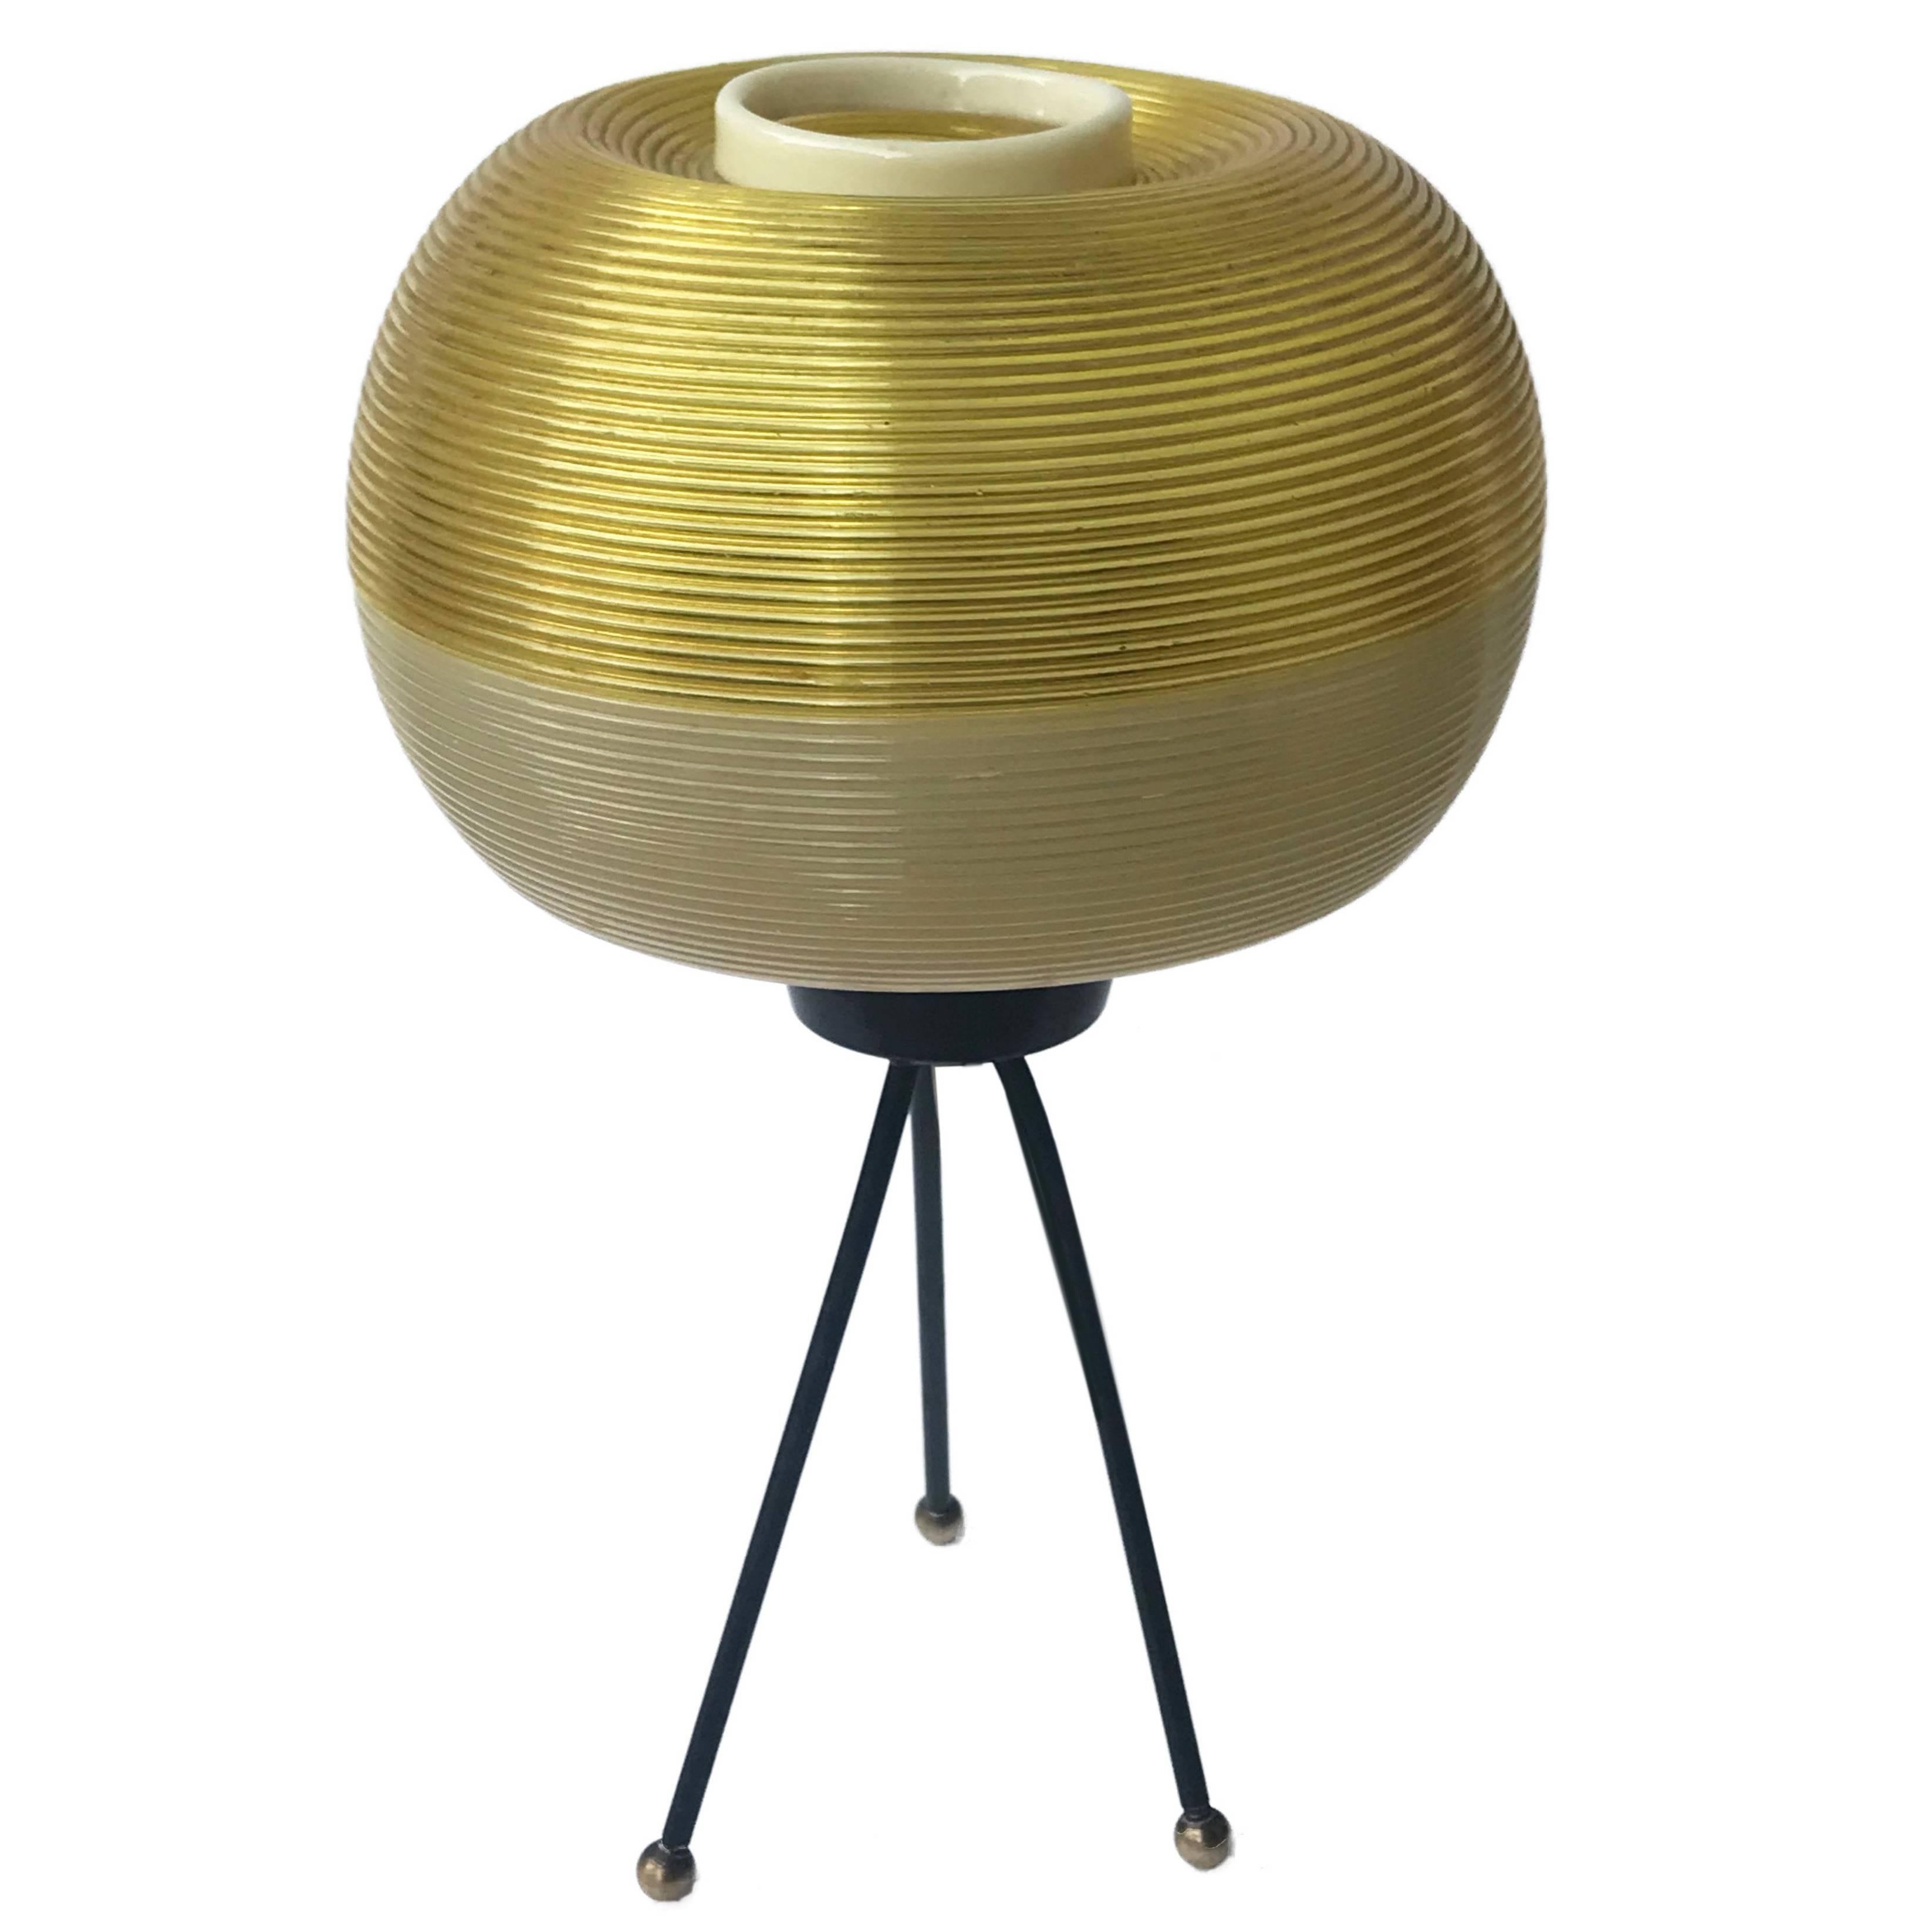 Rotaflex Table Lamp Disderot ARP Guariche Mortar Motte Design 1950s Table Lamp